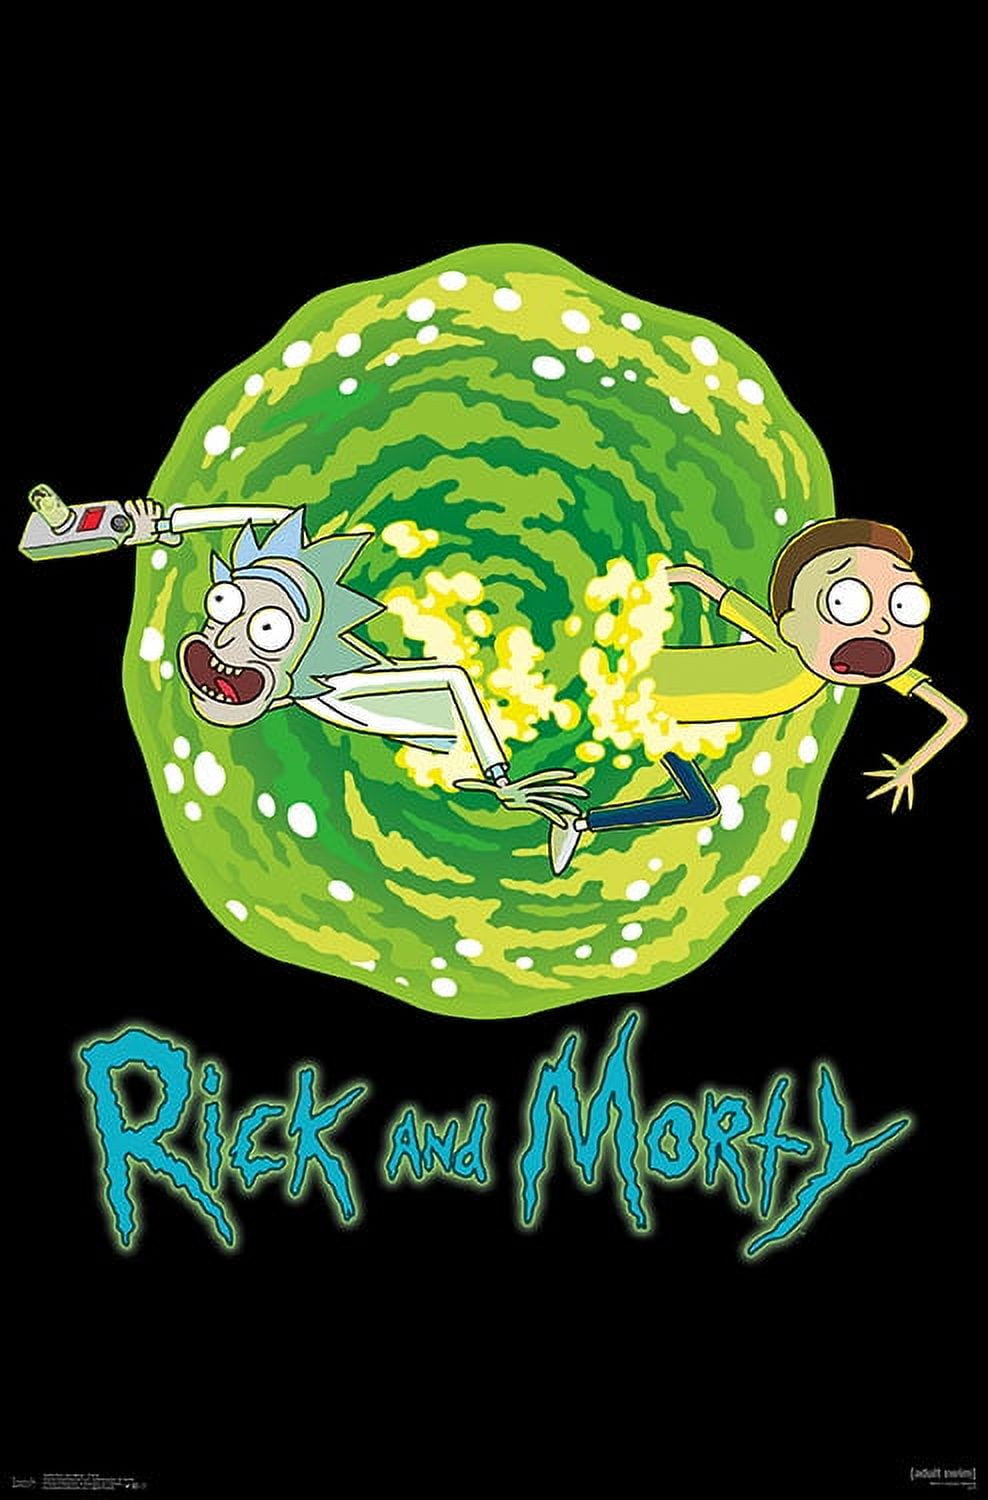 Rick And Morty - Portal Wall Poster, 22.375 x 34